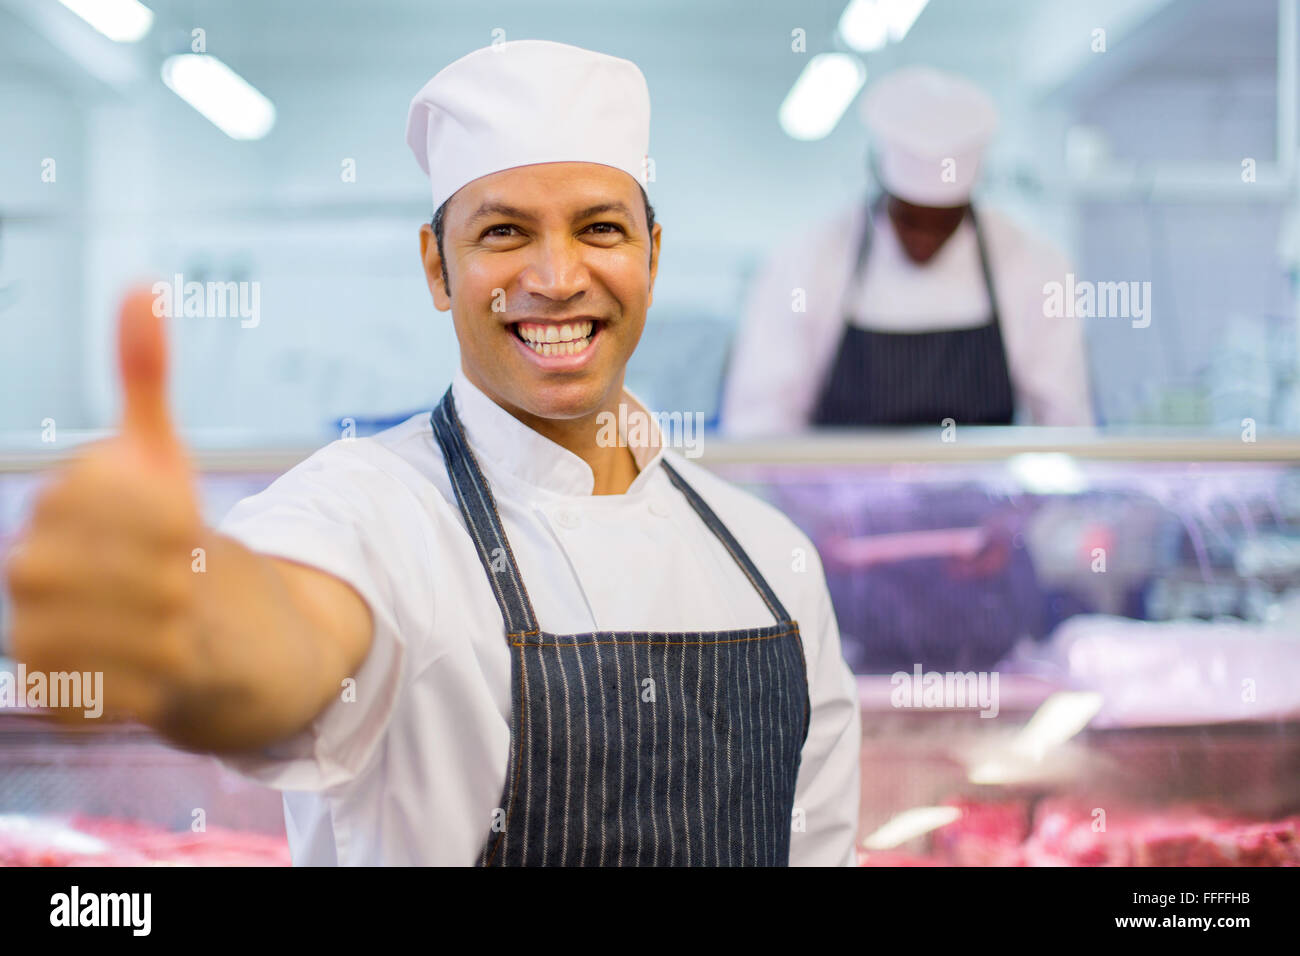 Cheerful male butcher thumb up en boucherie Banque D'Images